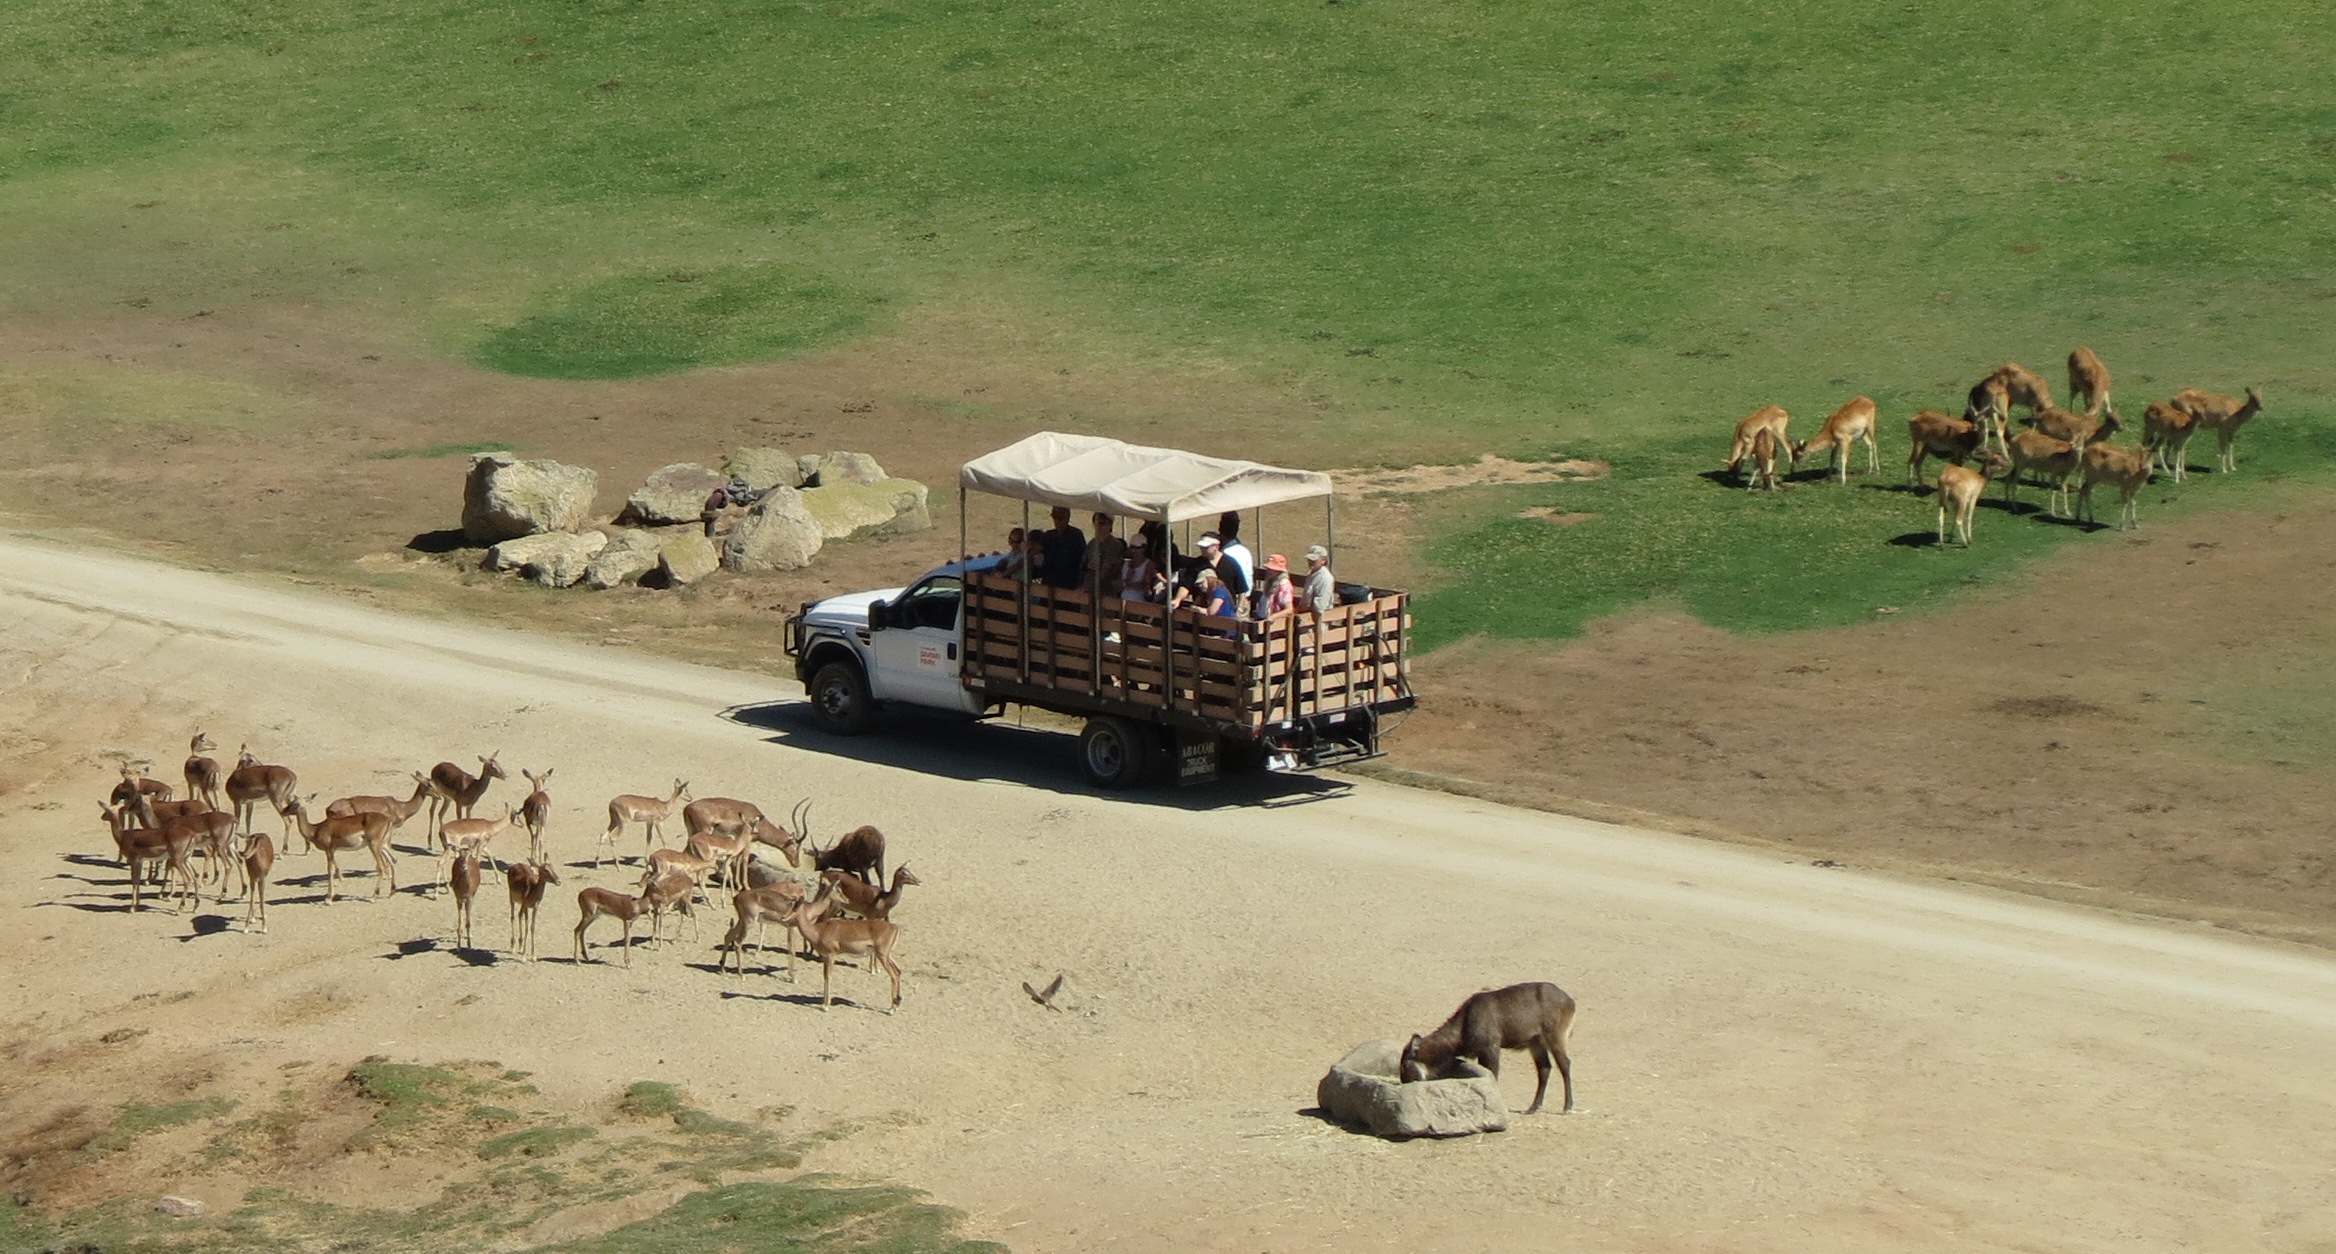 how big is safari park san diego